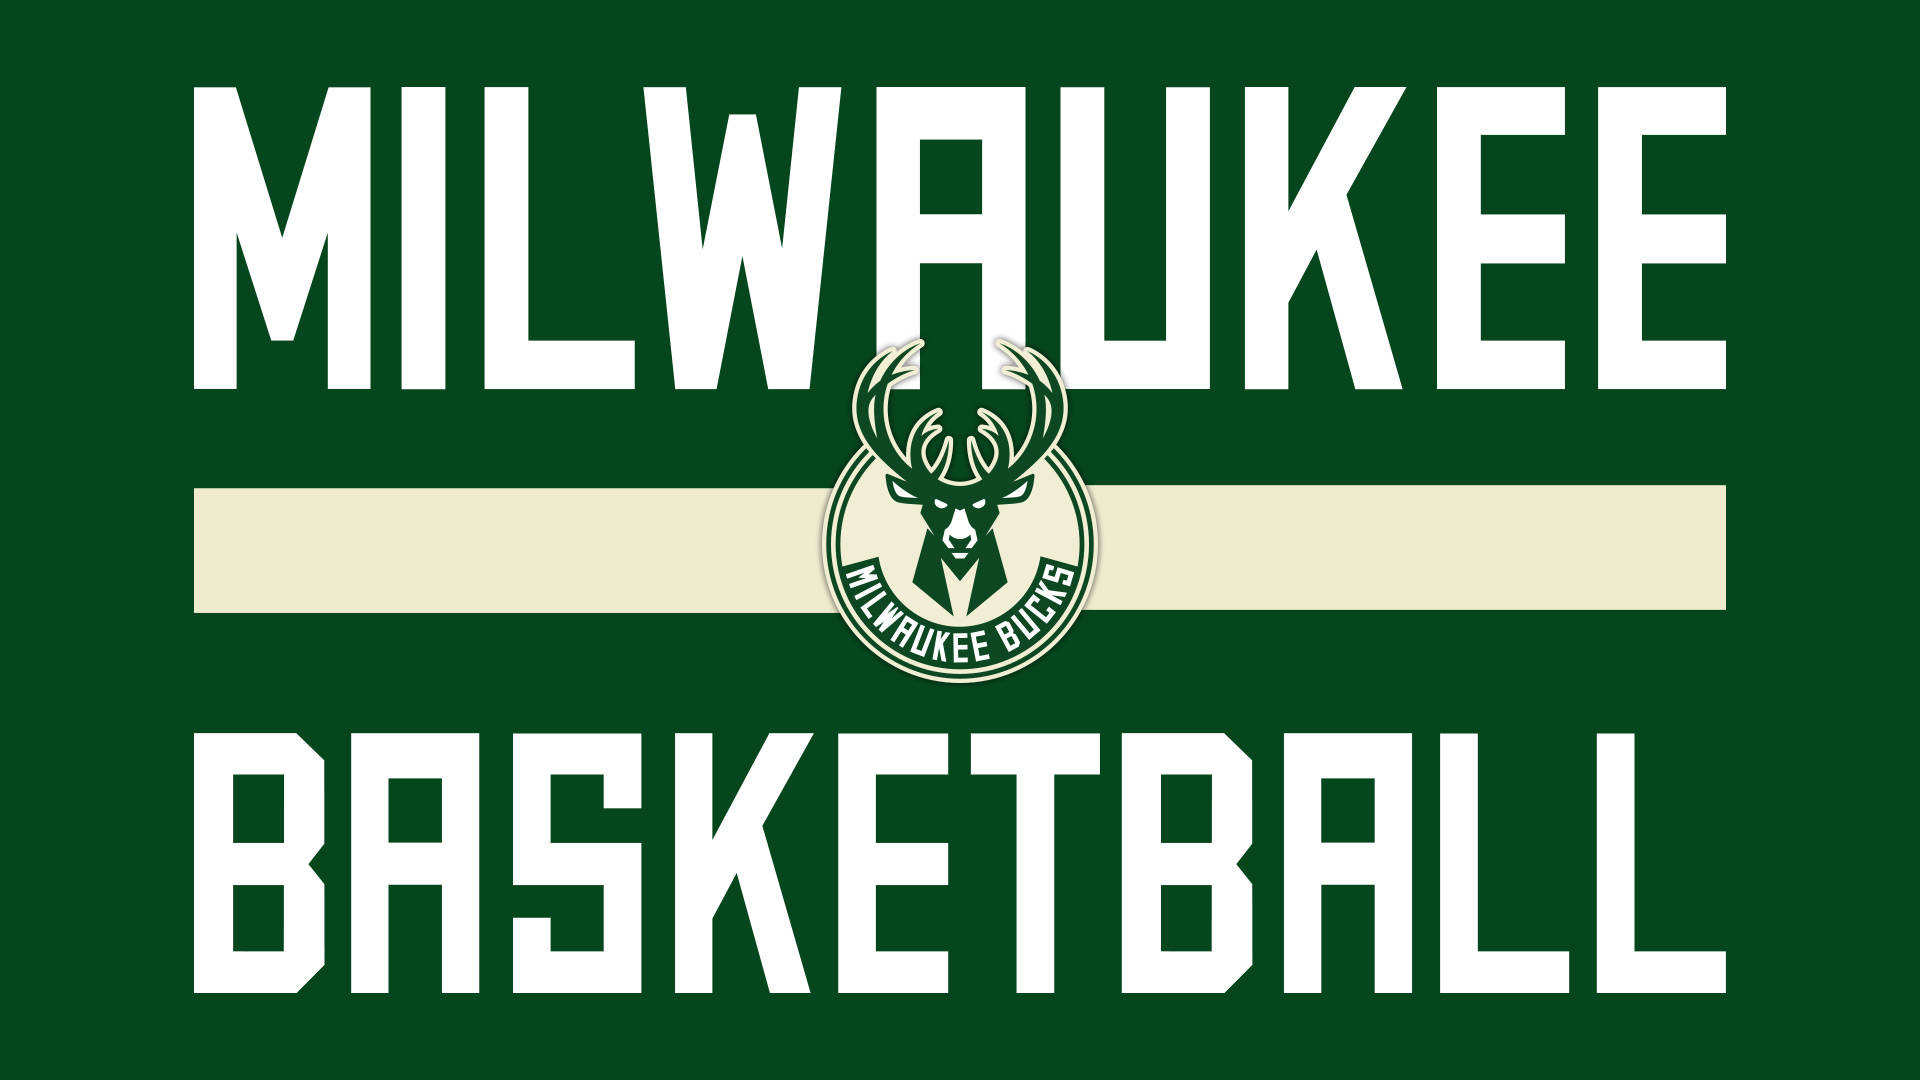 Milwaukeebucks Basketbollgrupp. Wallpaper